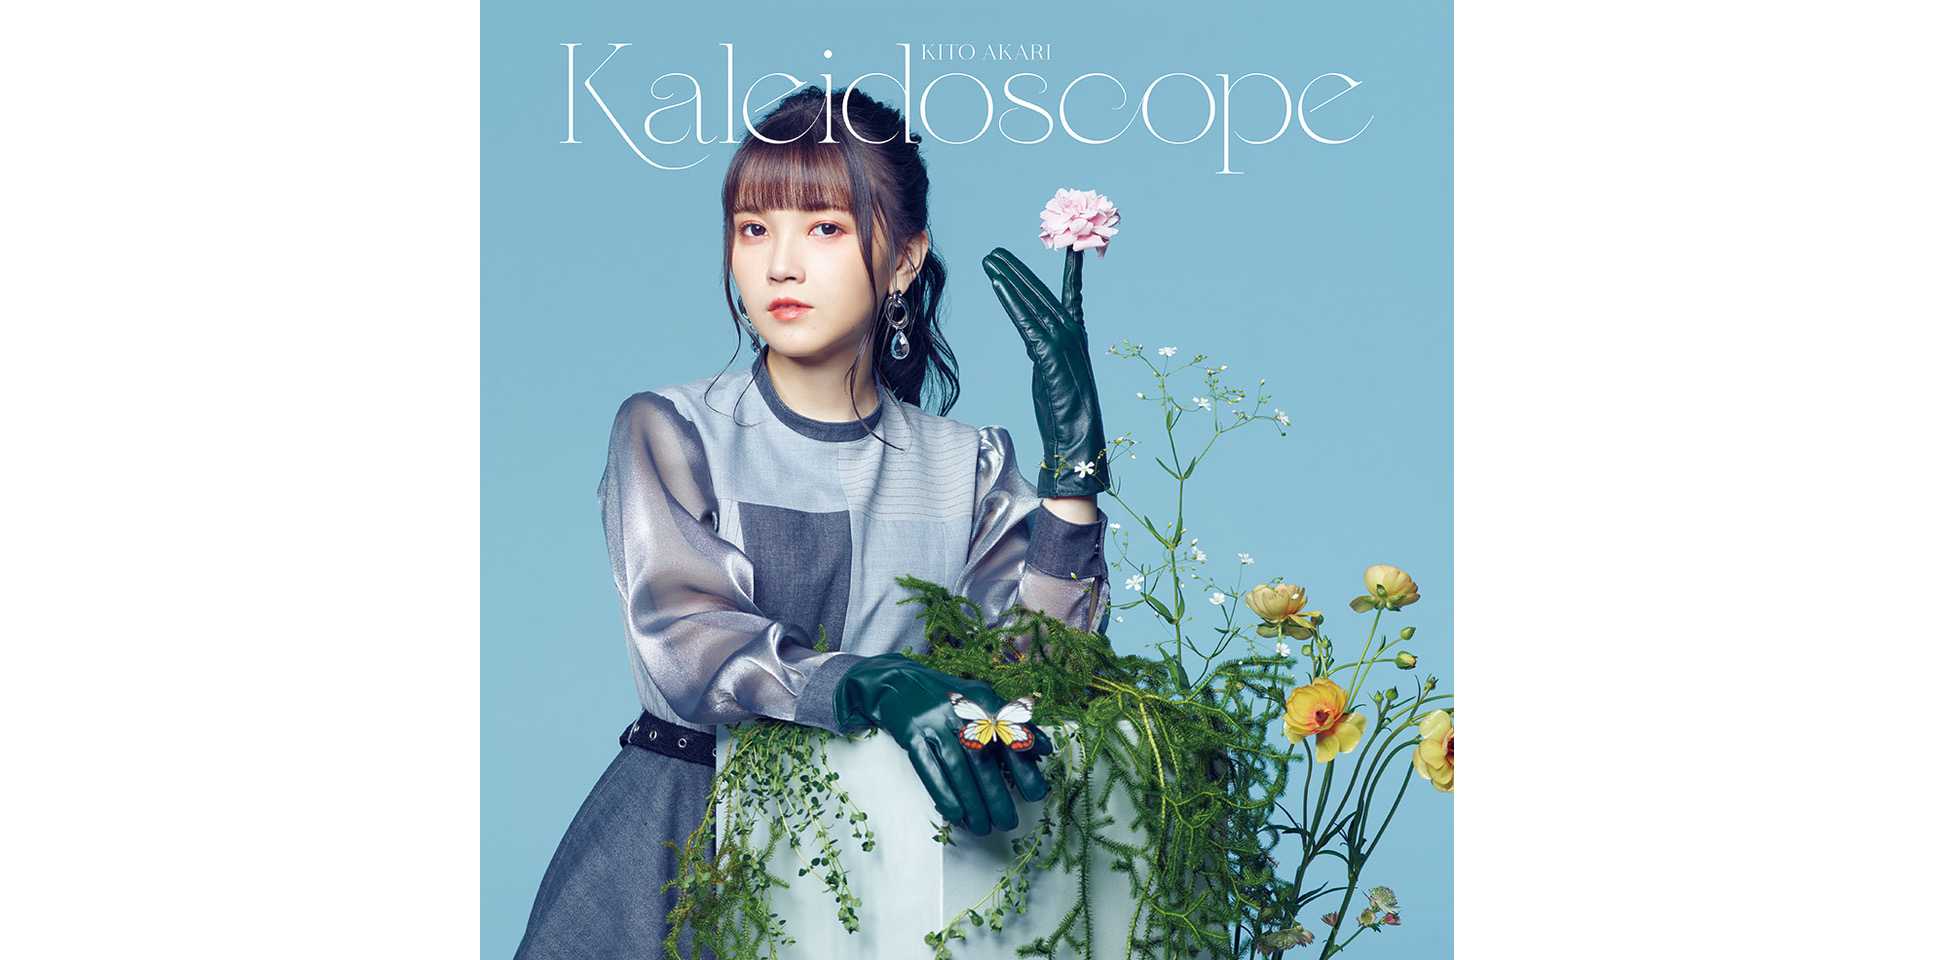 KitoAkari_kaleidoscope_tsujo